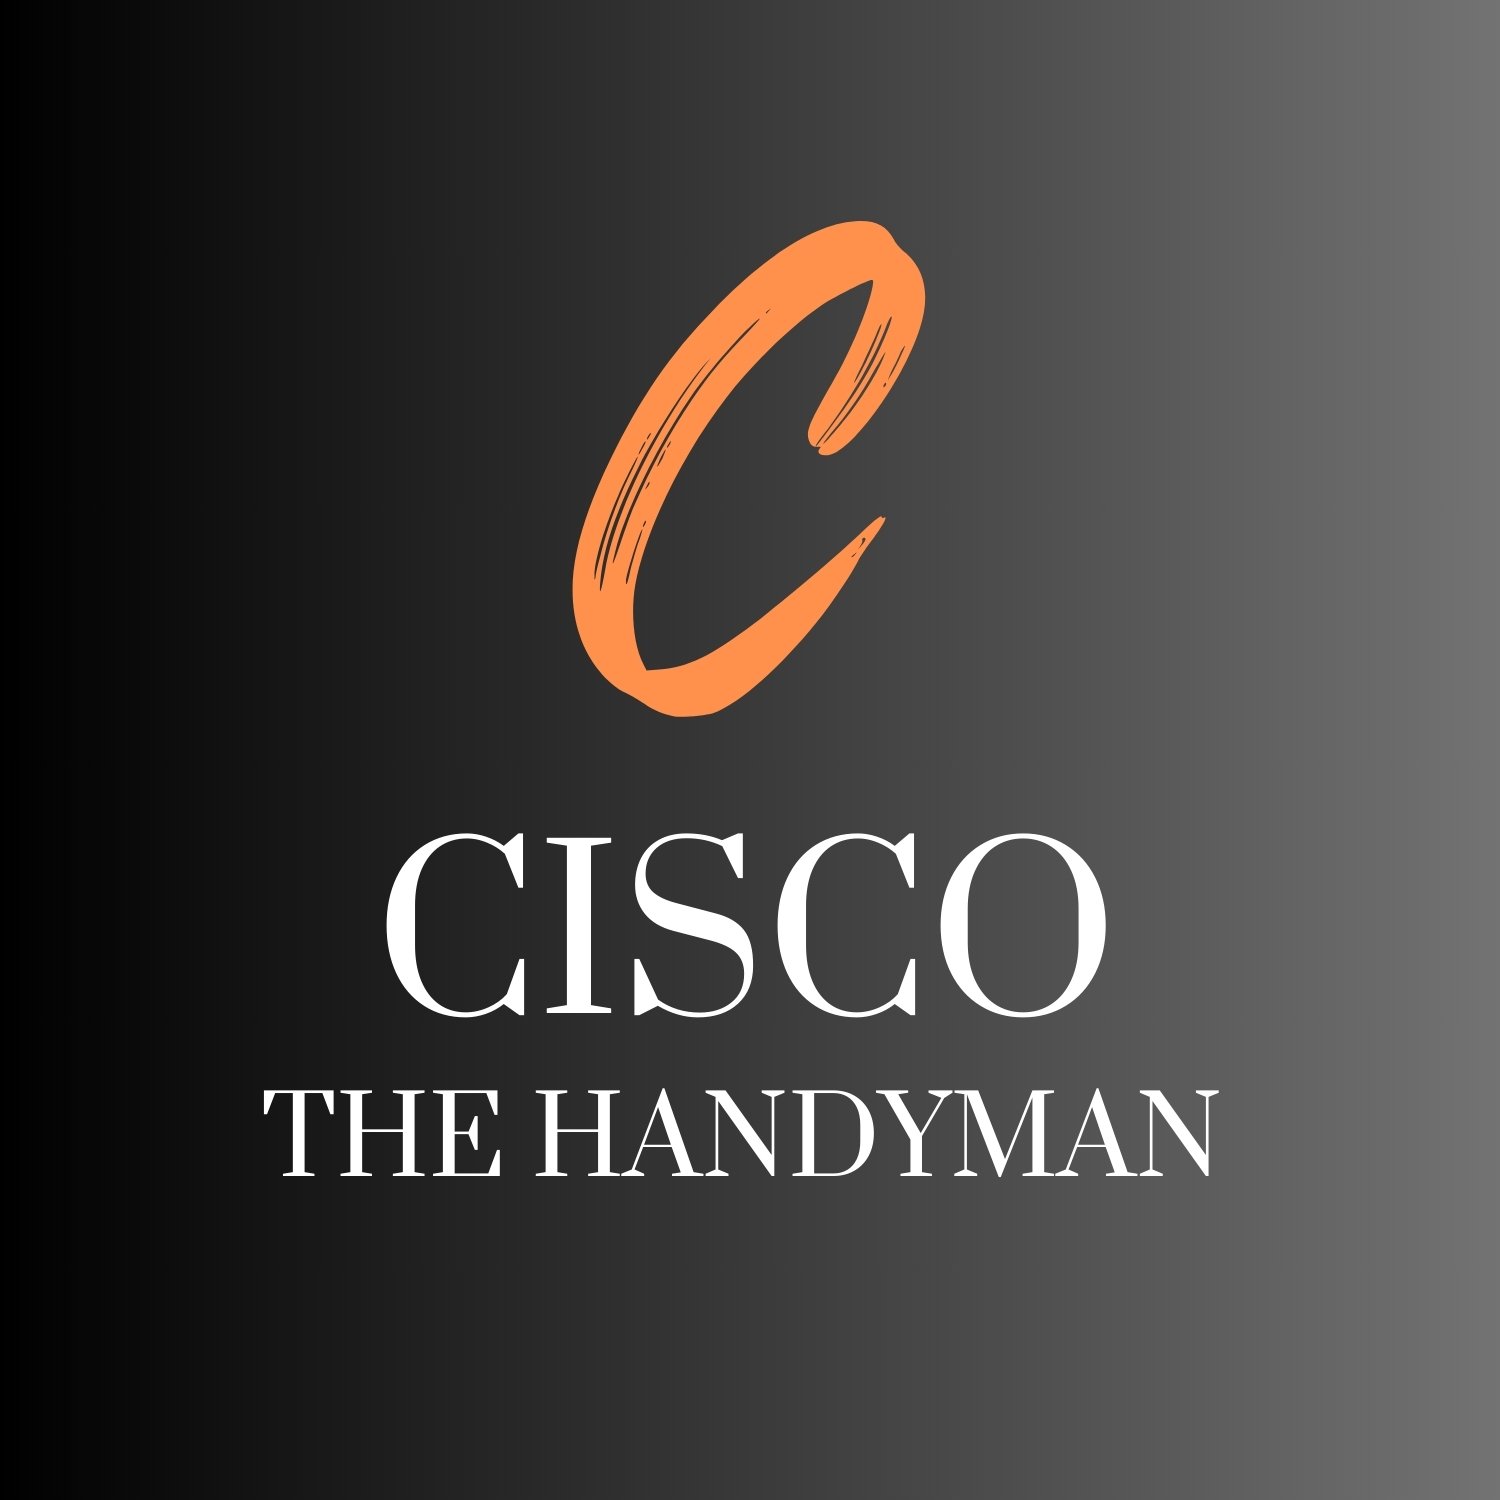 Cisco The Handyman